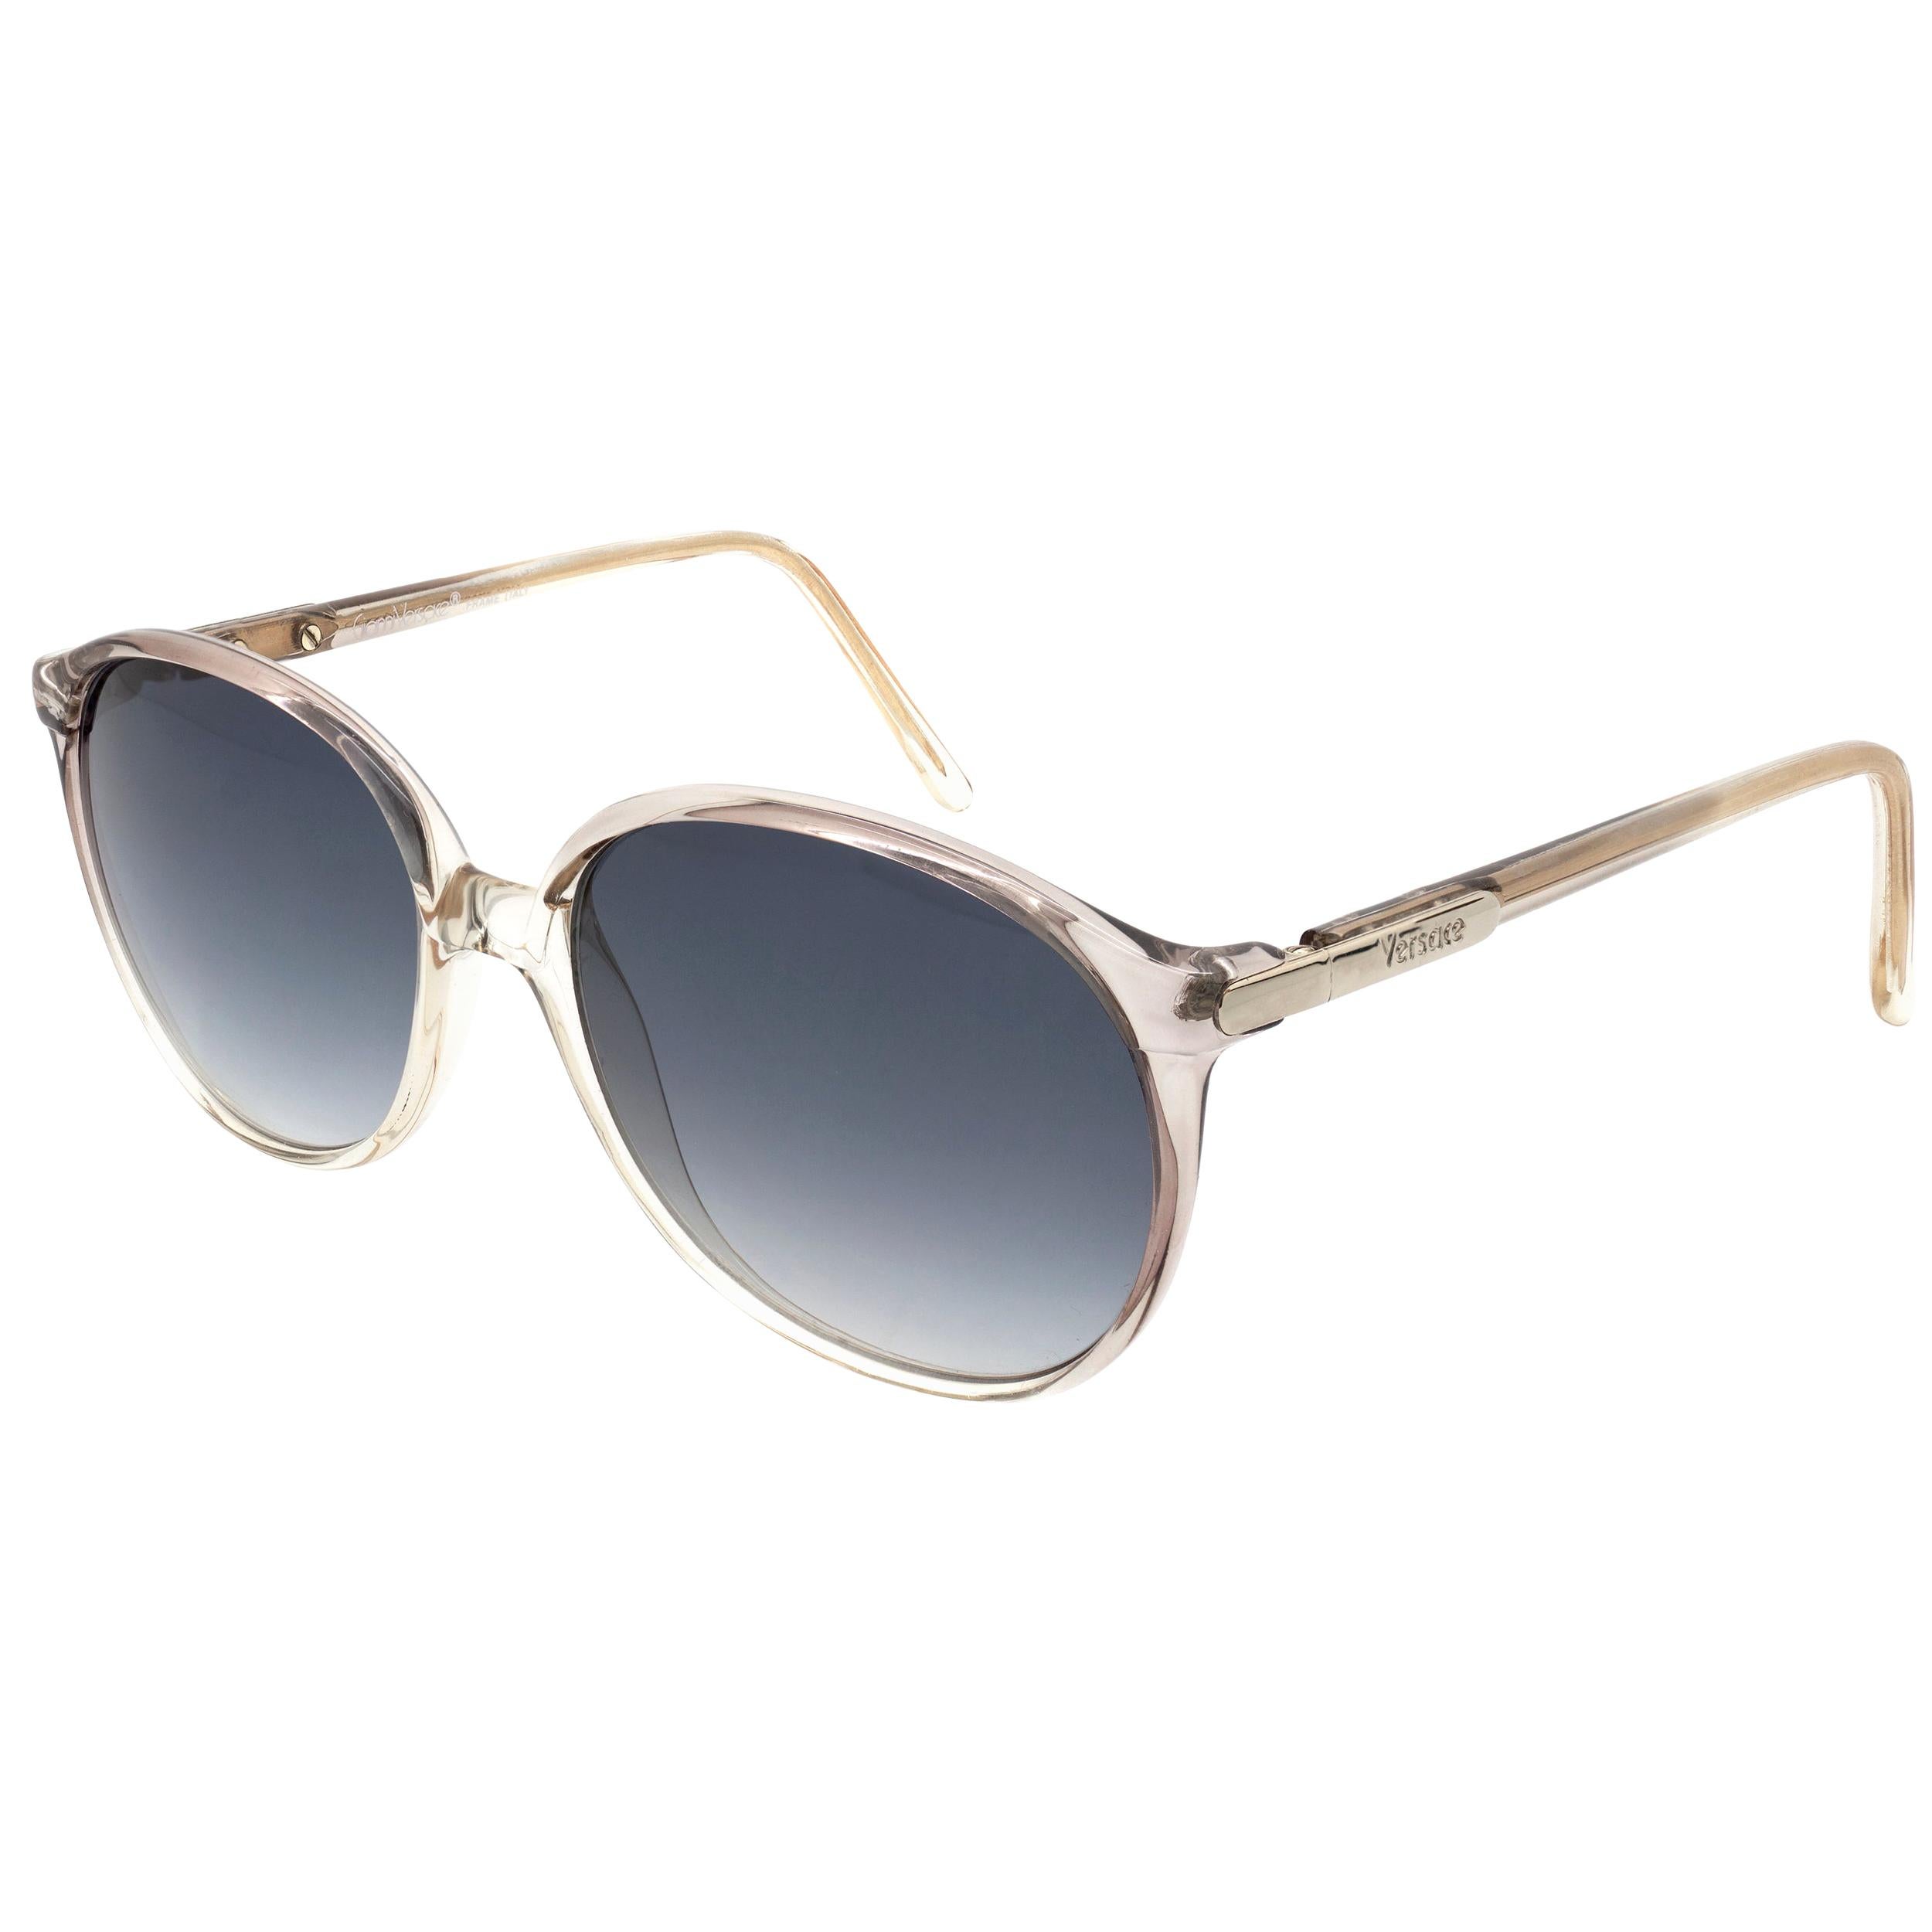 Gianni Versace sunglasses translucent grey